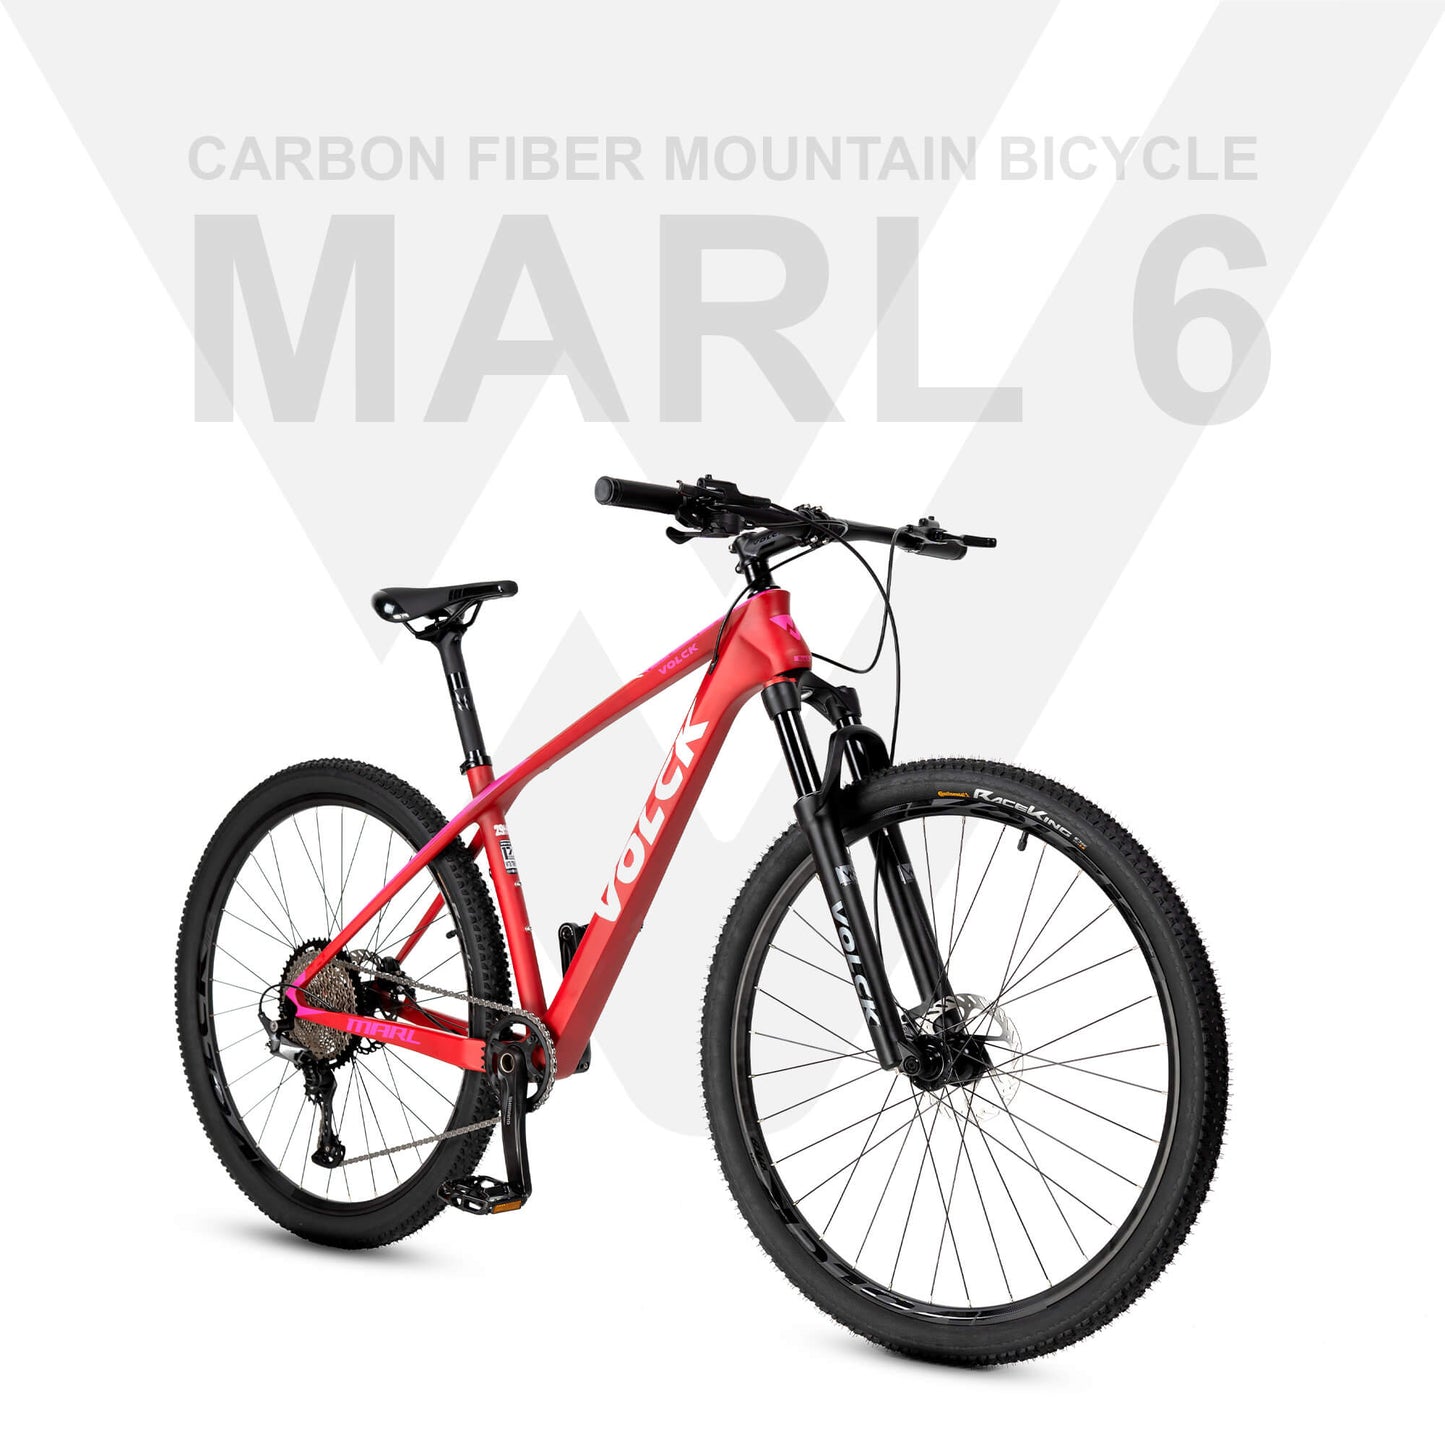 VOLCK Marl 6 Carbon Fiber Mountain Bike (29" x 17") - Matte Red